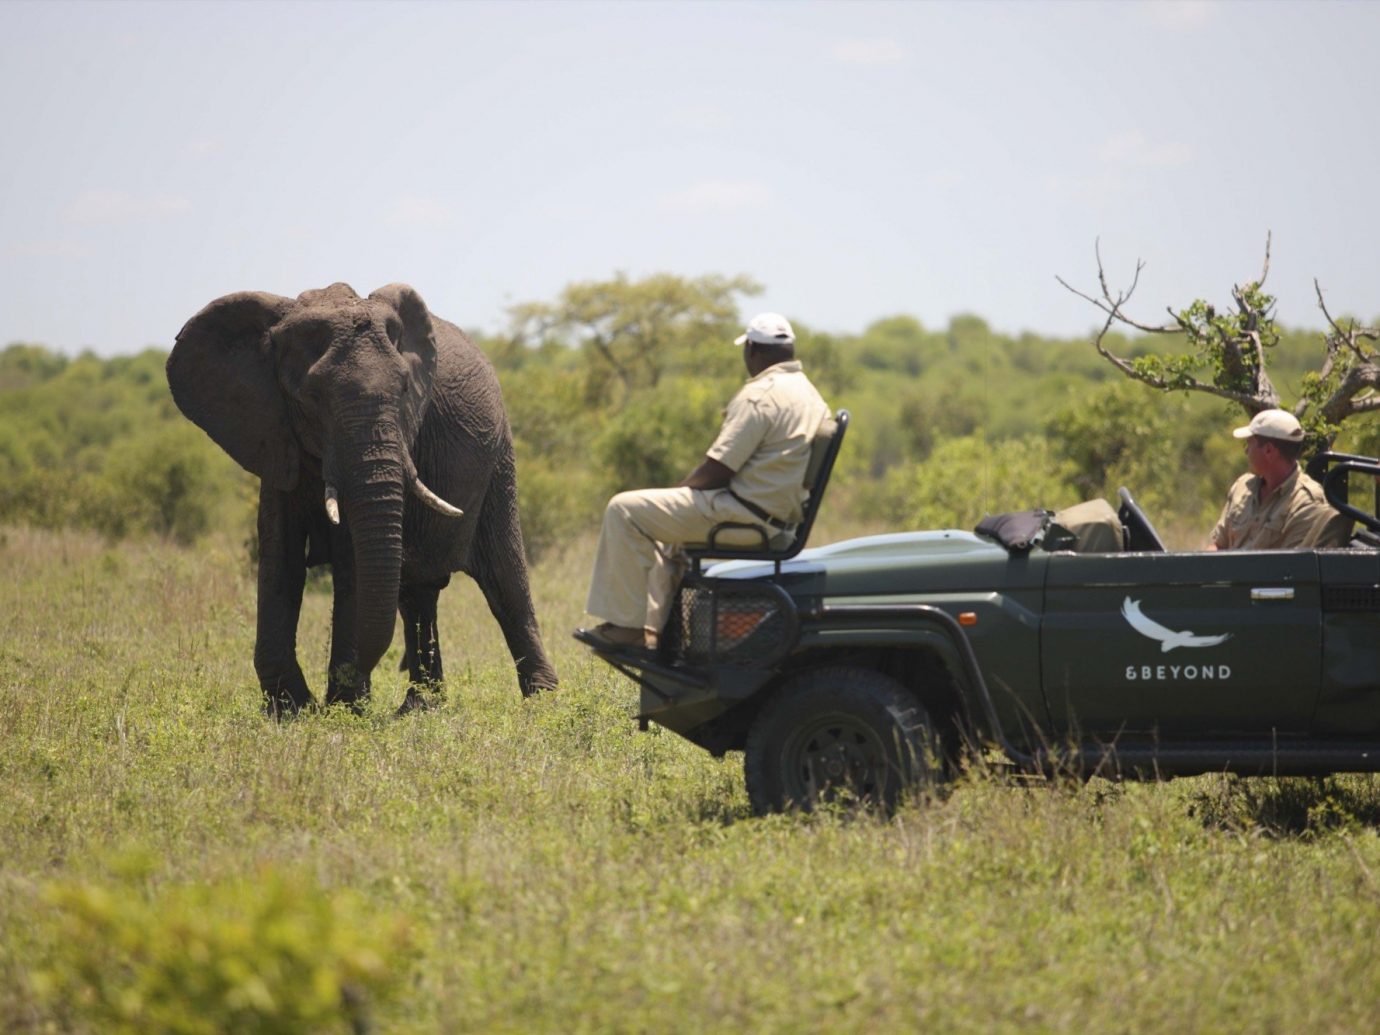 Outdoors + Adventure Travel Tips grass outdoor sky field Safari mammal Adventure grassy elephant military herd lush